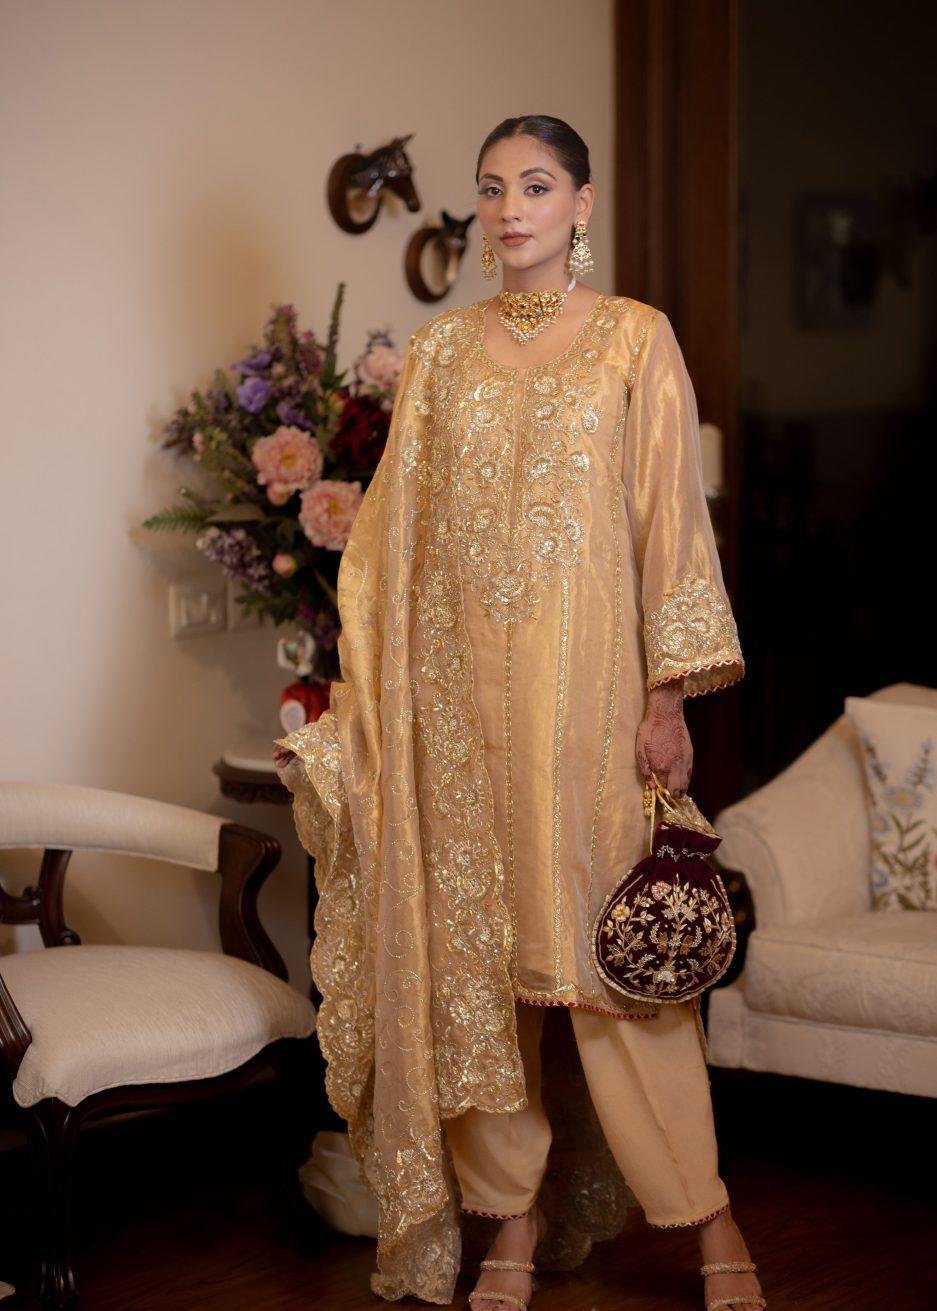 Pakistani Designer Punjabi Suits Indian Readymade Salwar Kameez All Size  Dresses | eBay